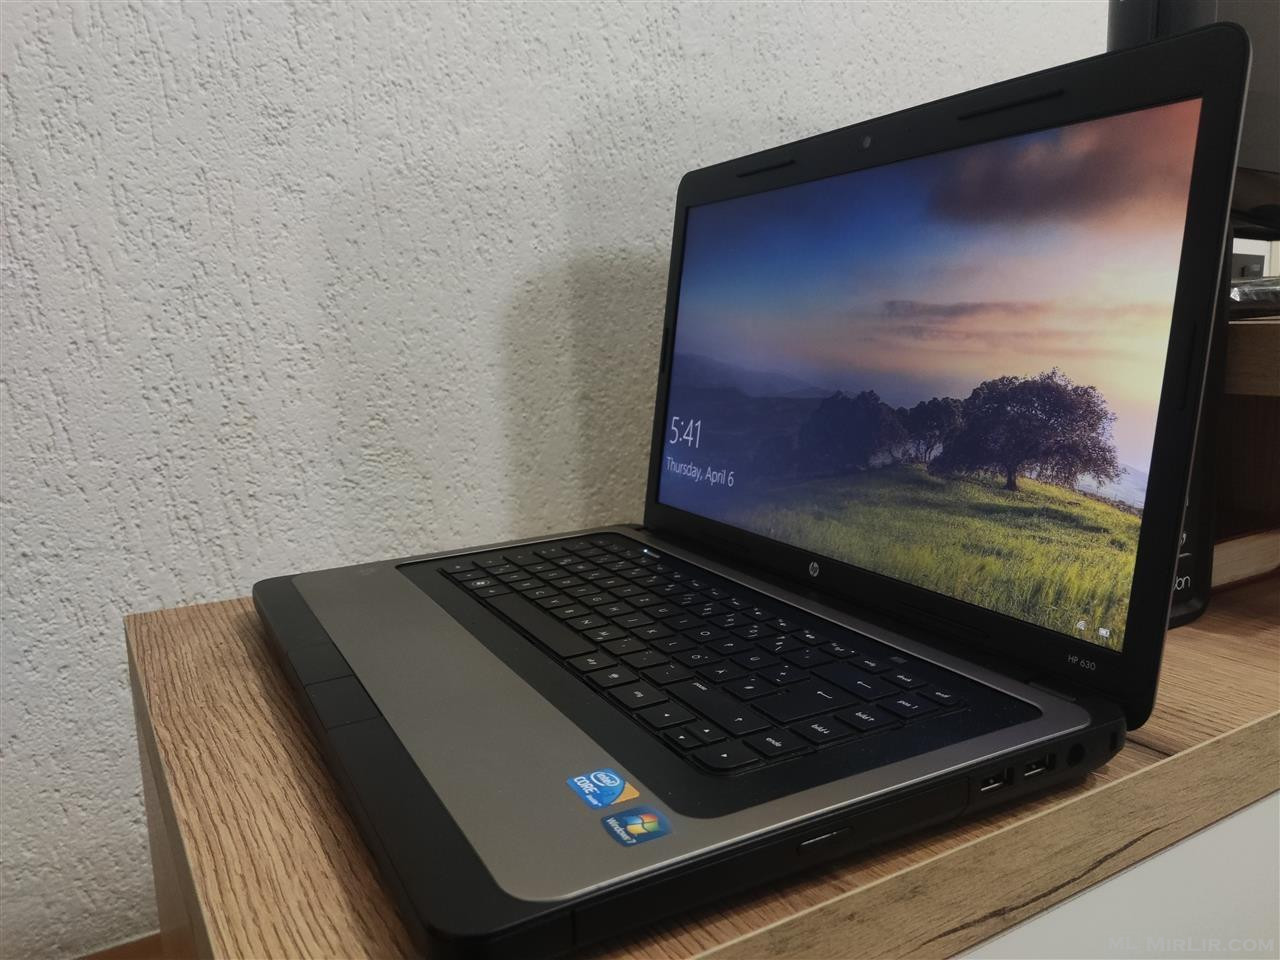 Laptop HP 630